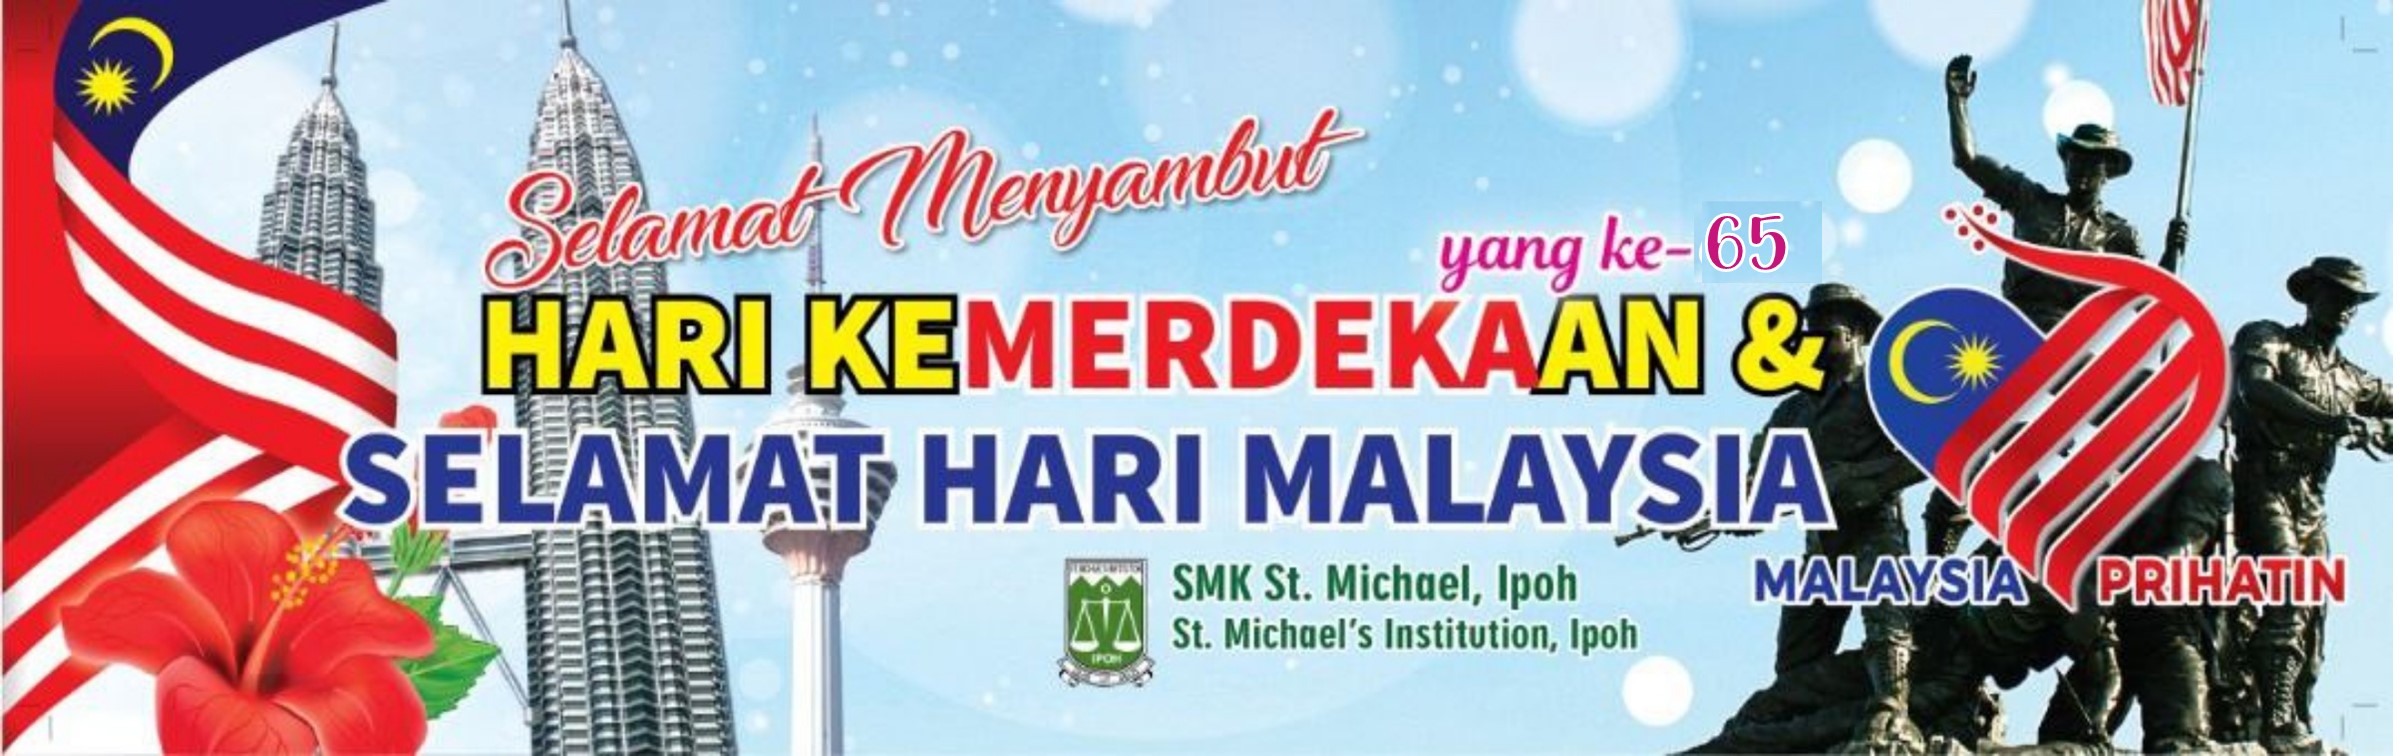 SMK St. Michael, Ipoh Perak, Malaysia.